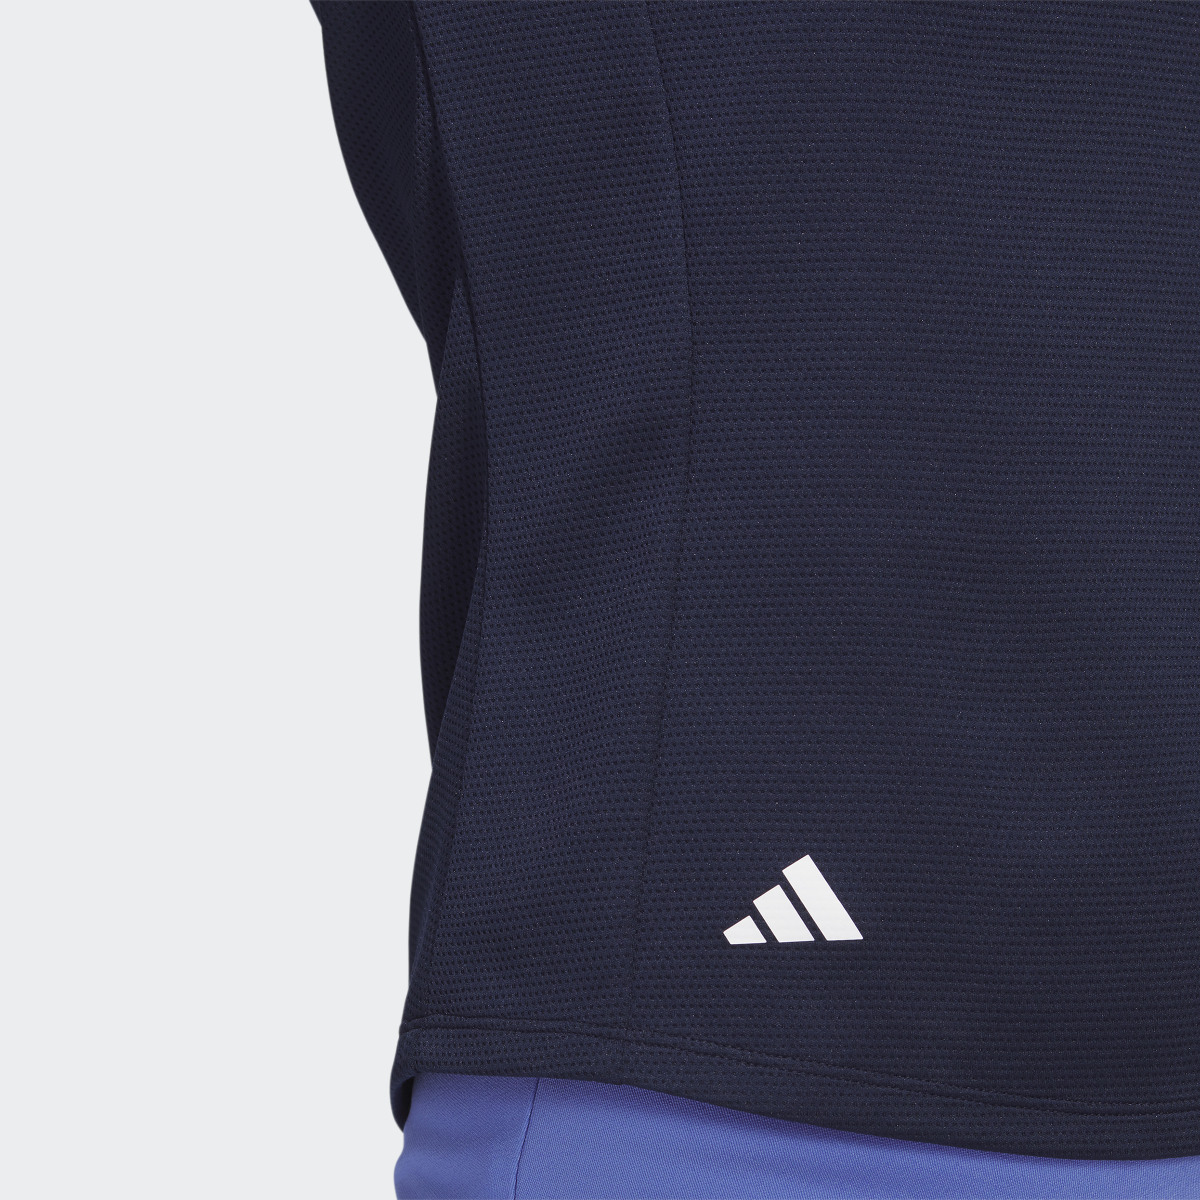 Adidas Textured Golf Polo Shirt. 7